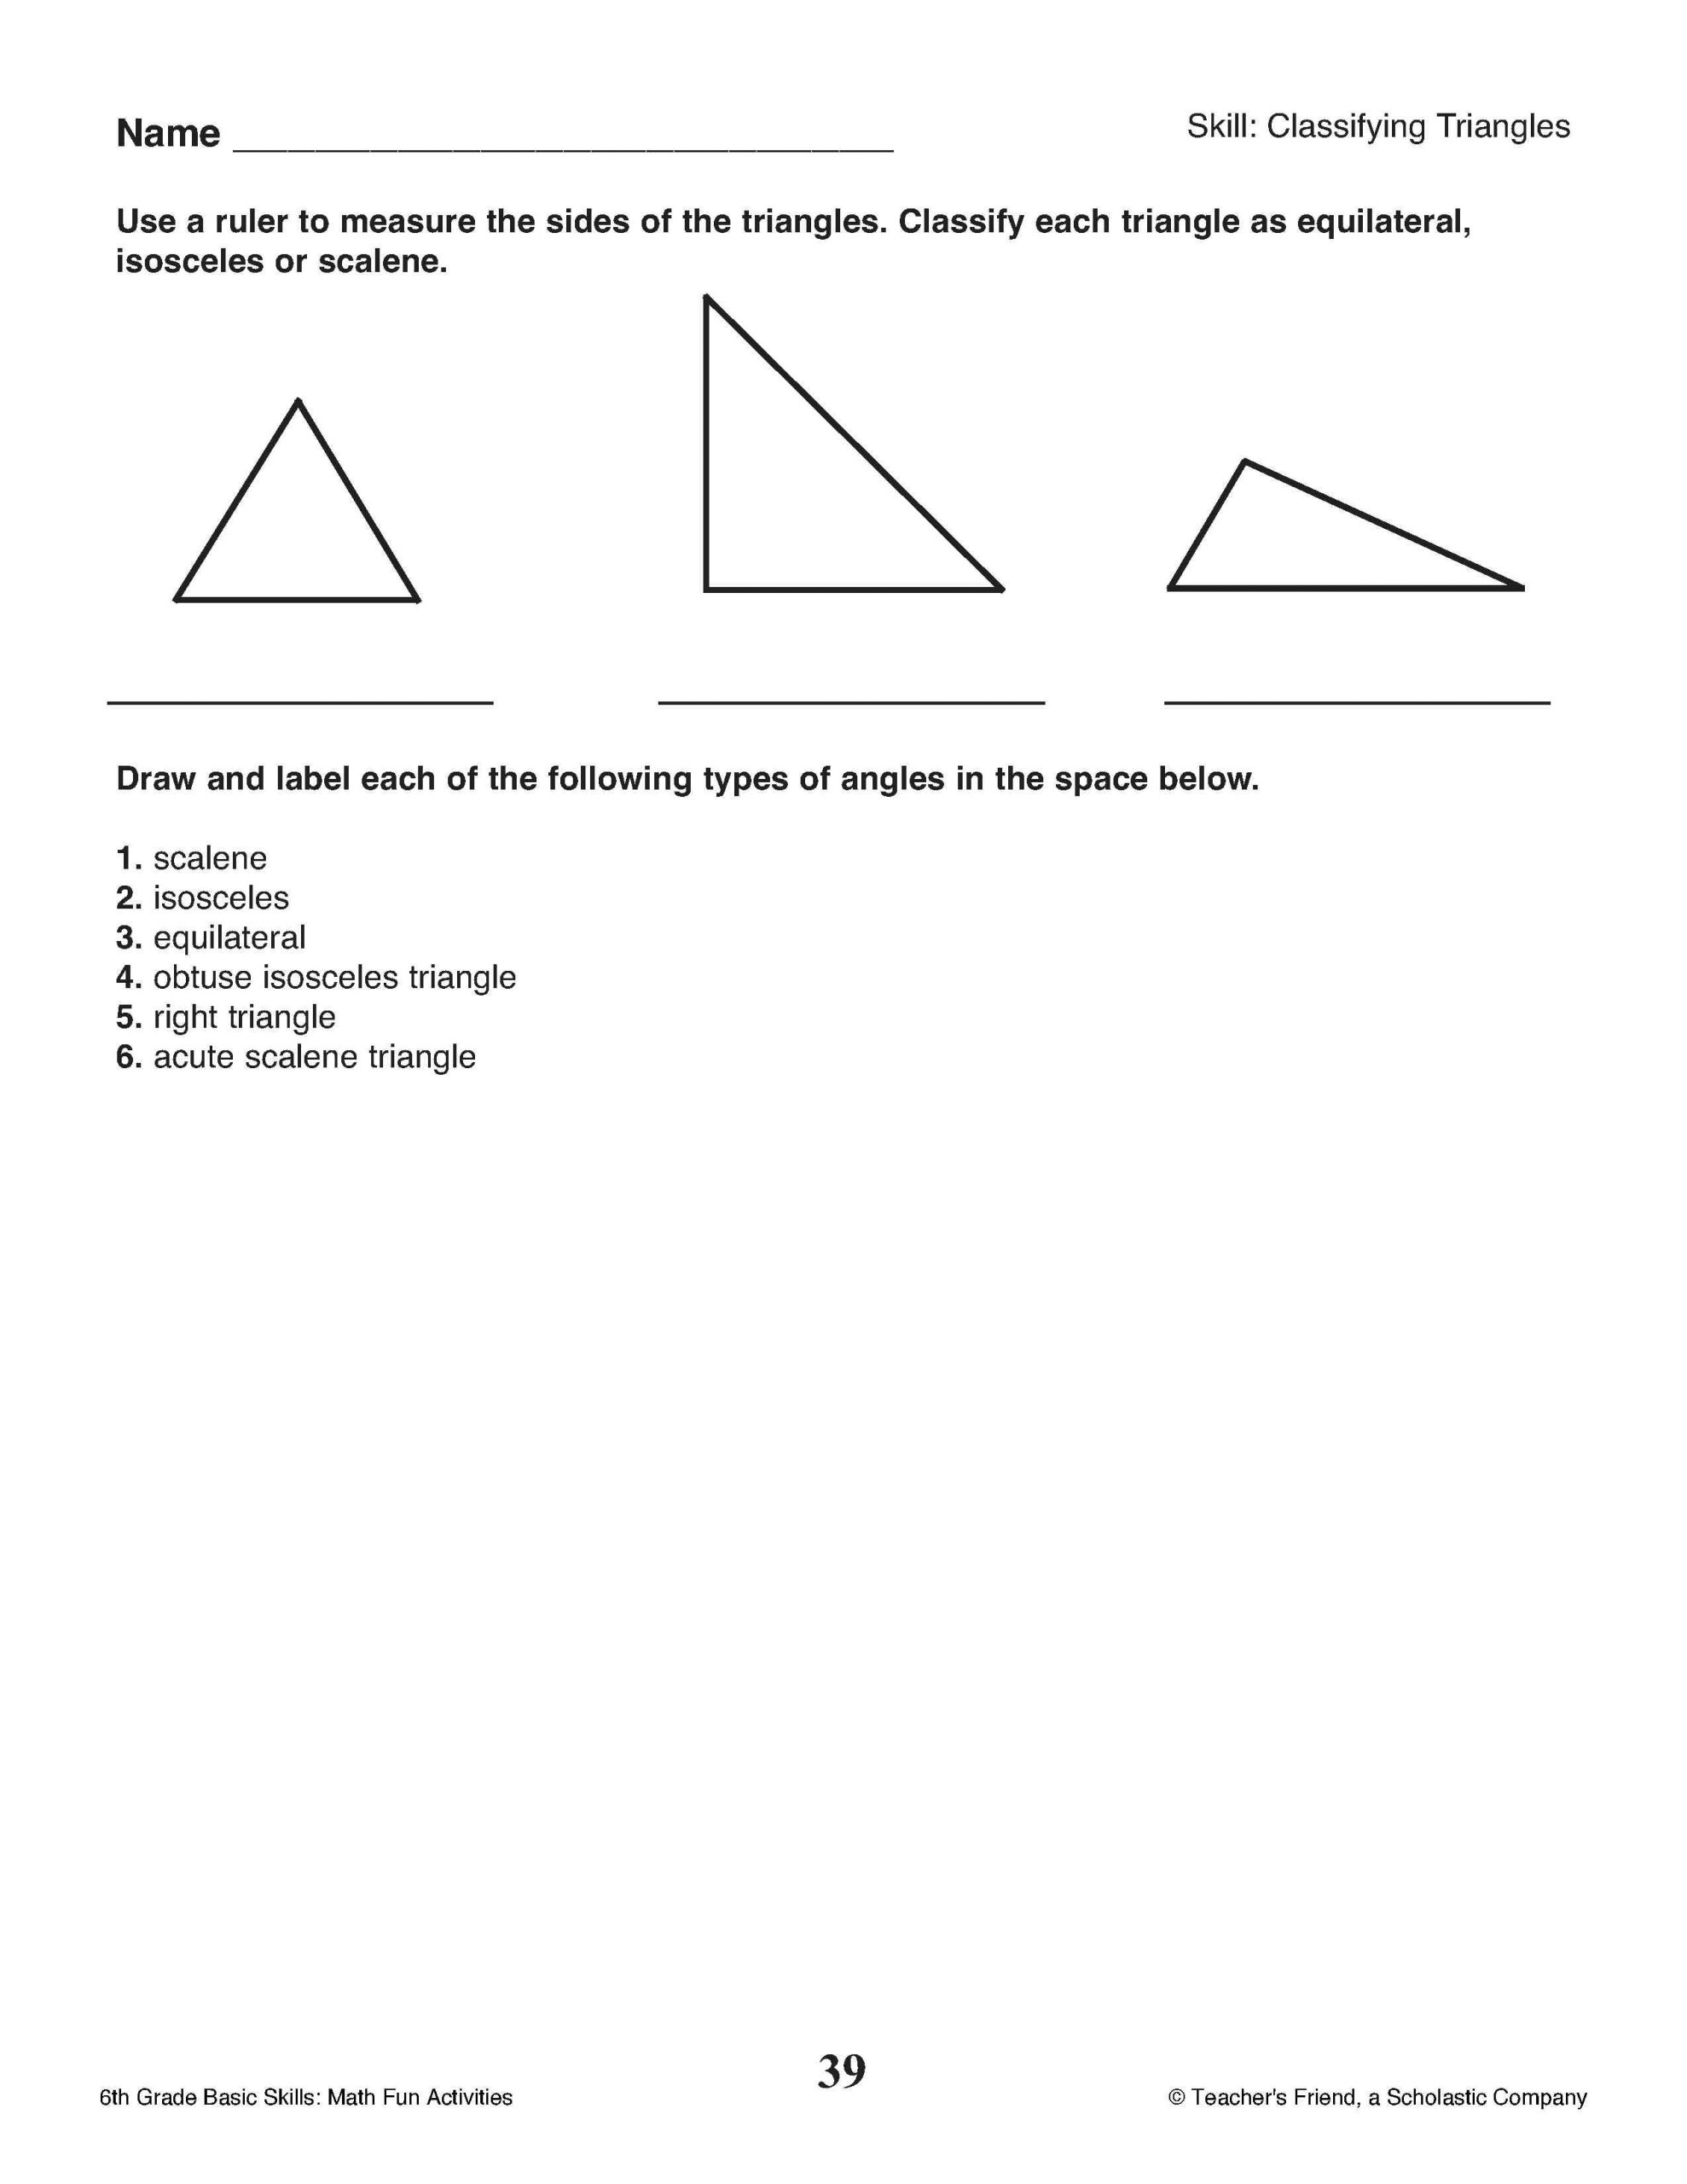 Five Ways To Make Geometry Memorable | Scholastic